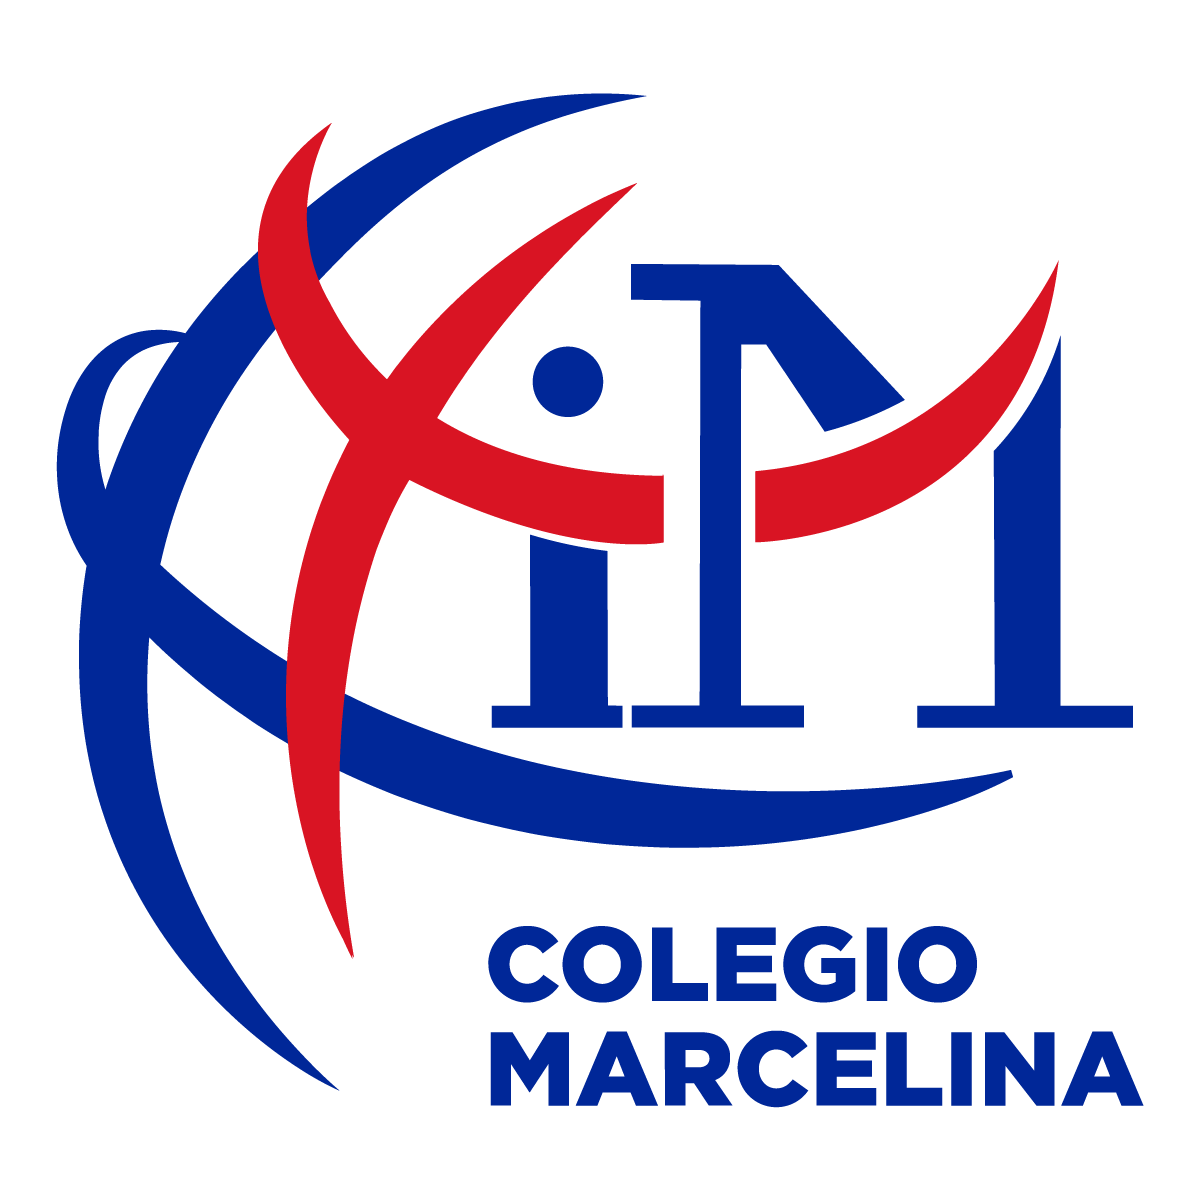 colegio marcelina logo